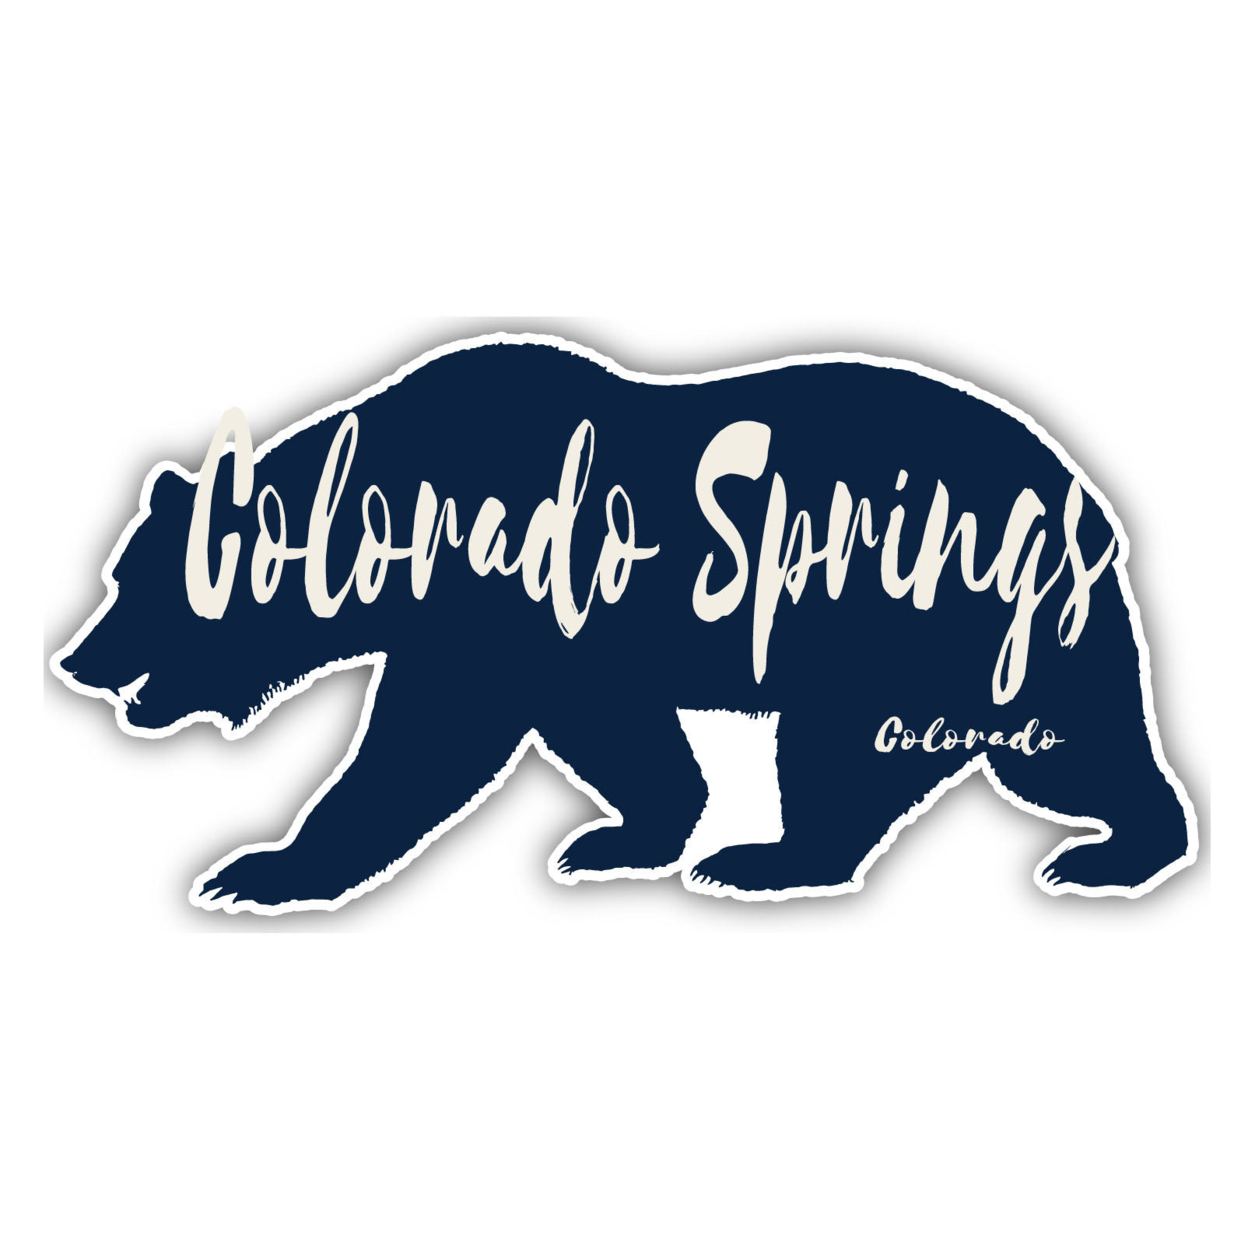 Colorado Springs Colorado Souvenir Decorative Stickers (Choose Theme And Size) - Single Unit, 8-Inch, Adventures Awaits